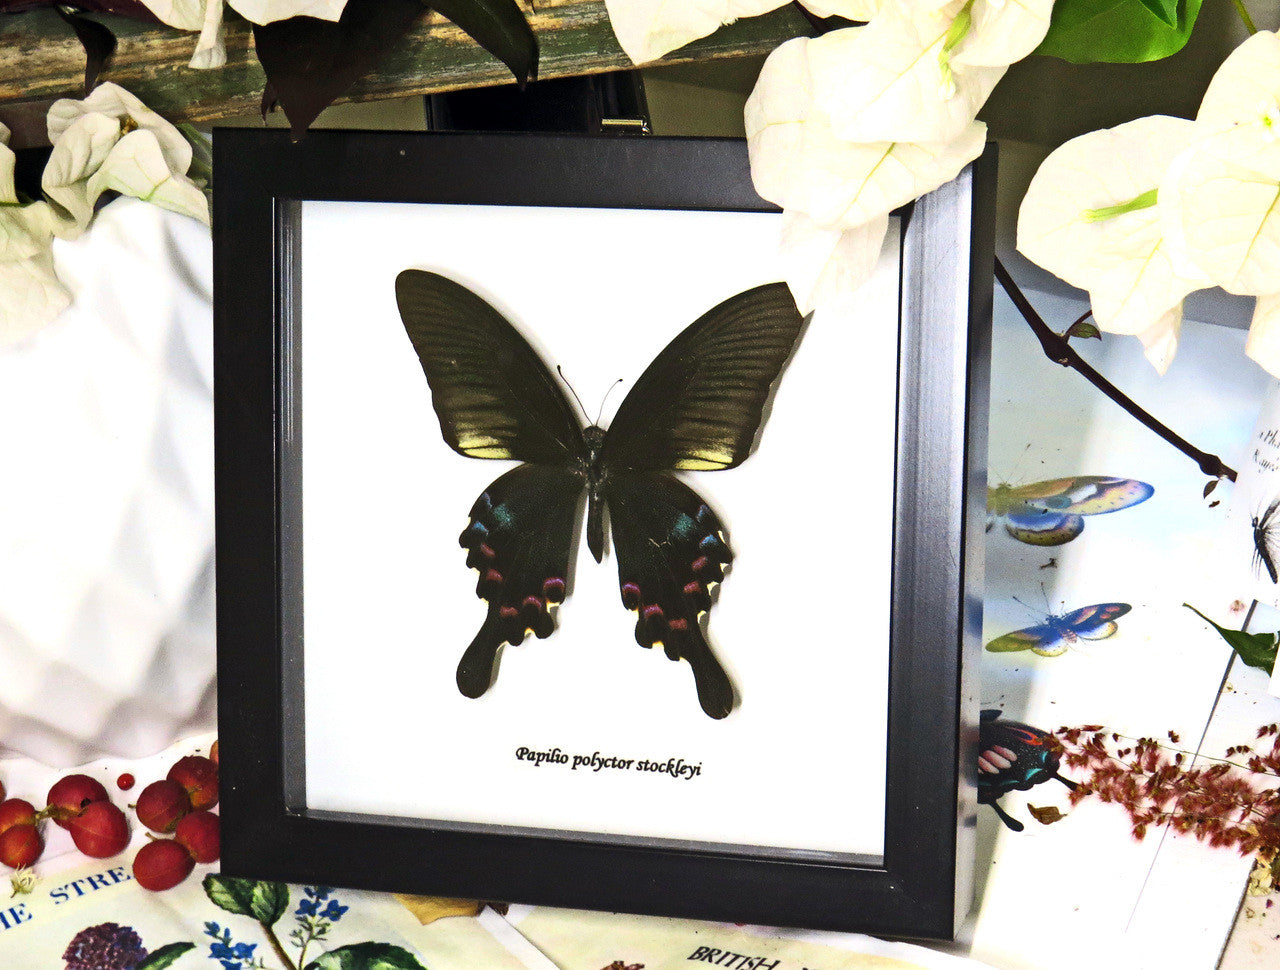 Papilio polyctor stockleyi.